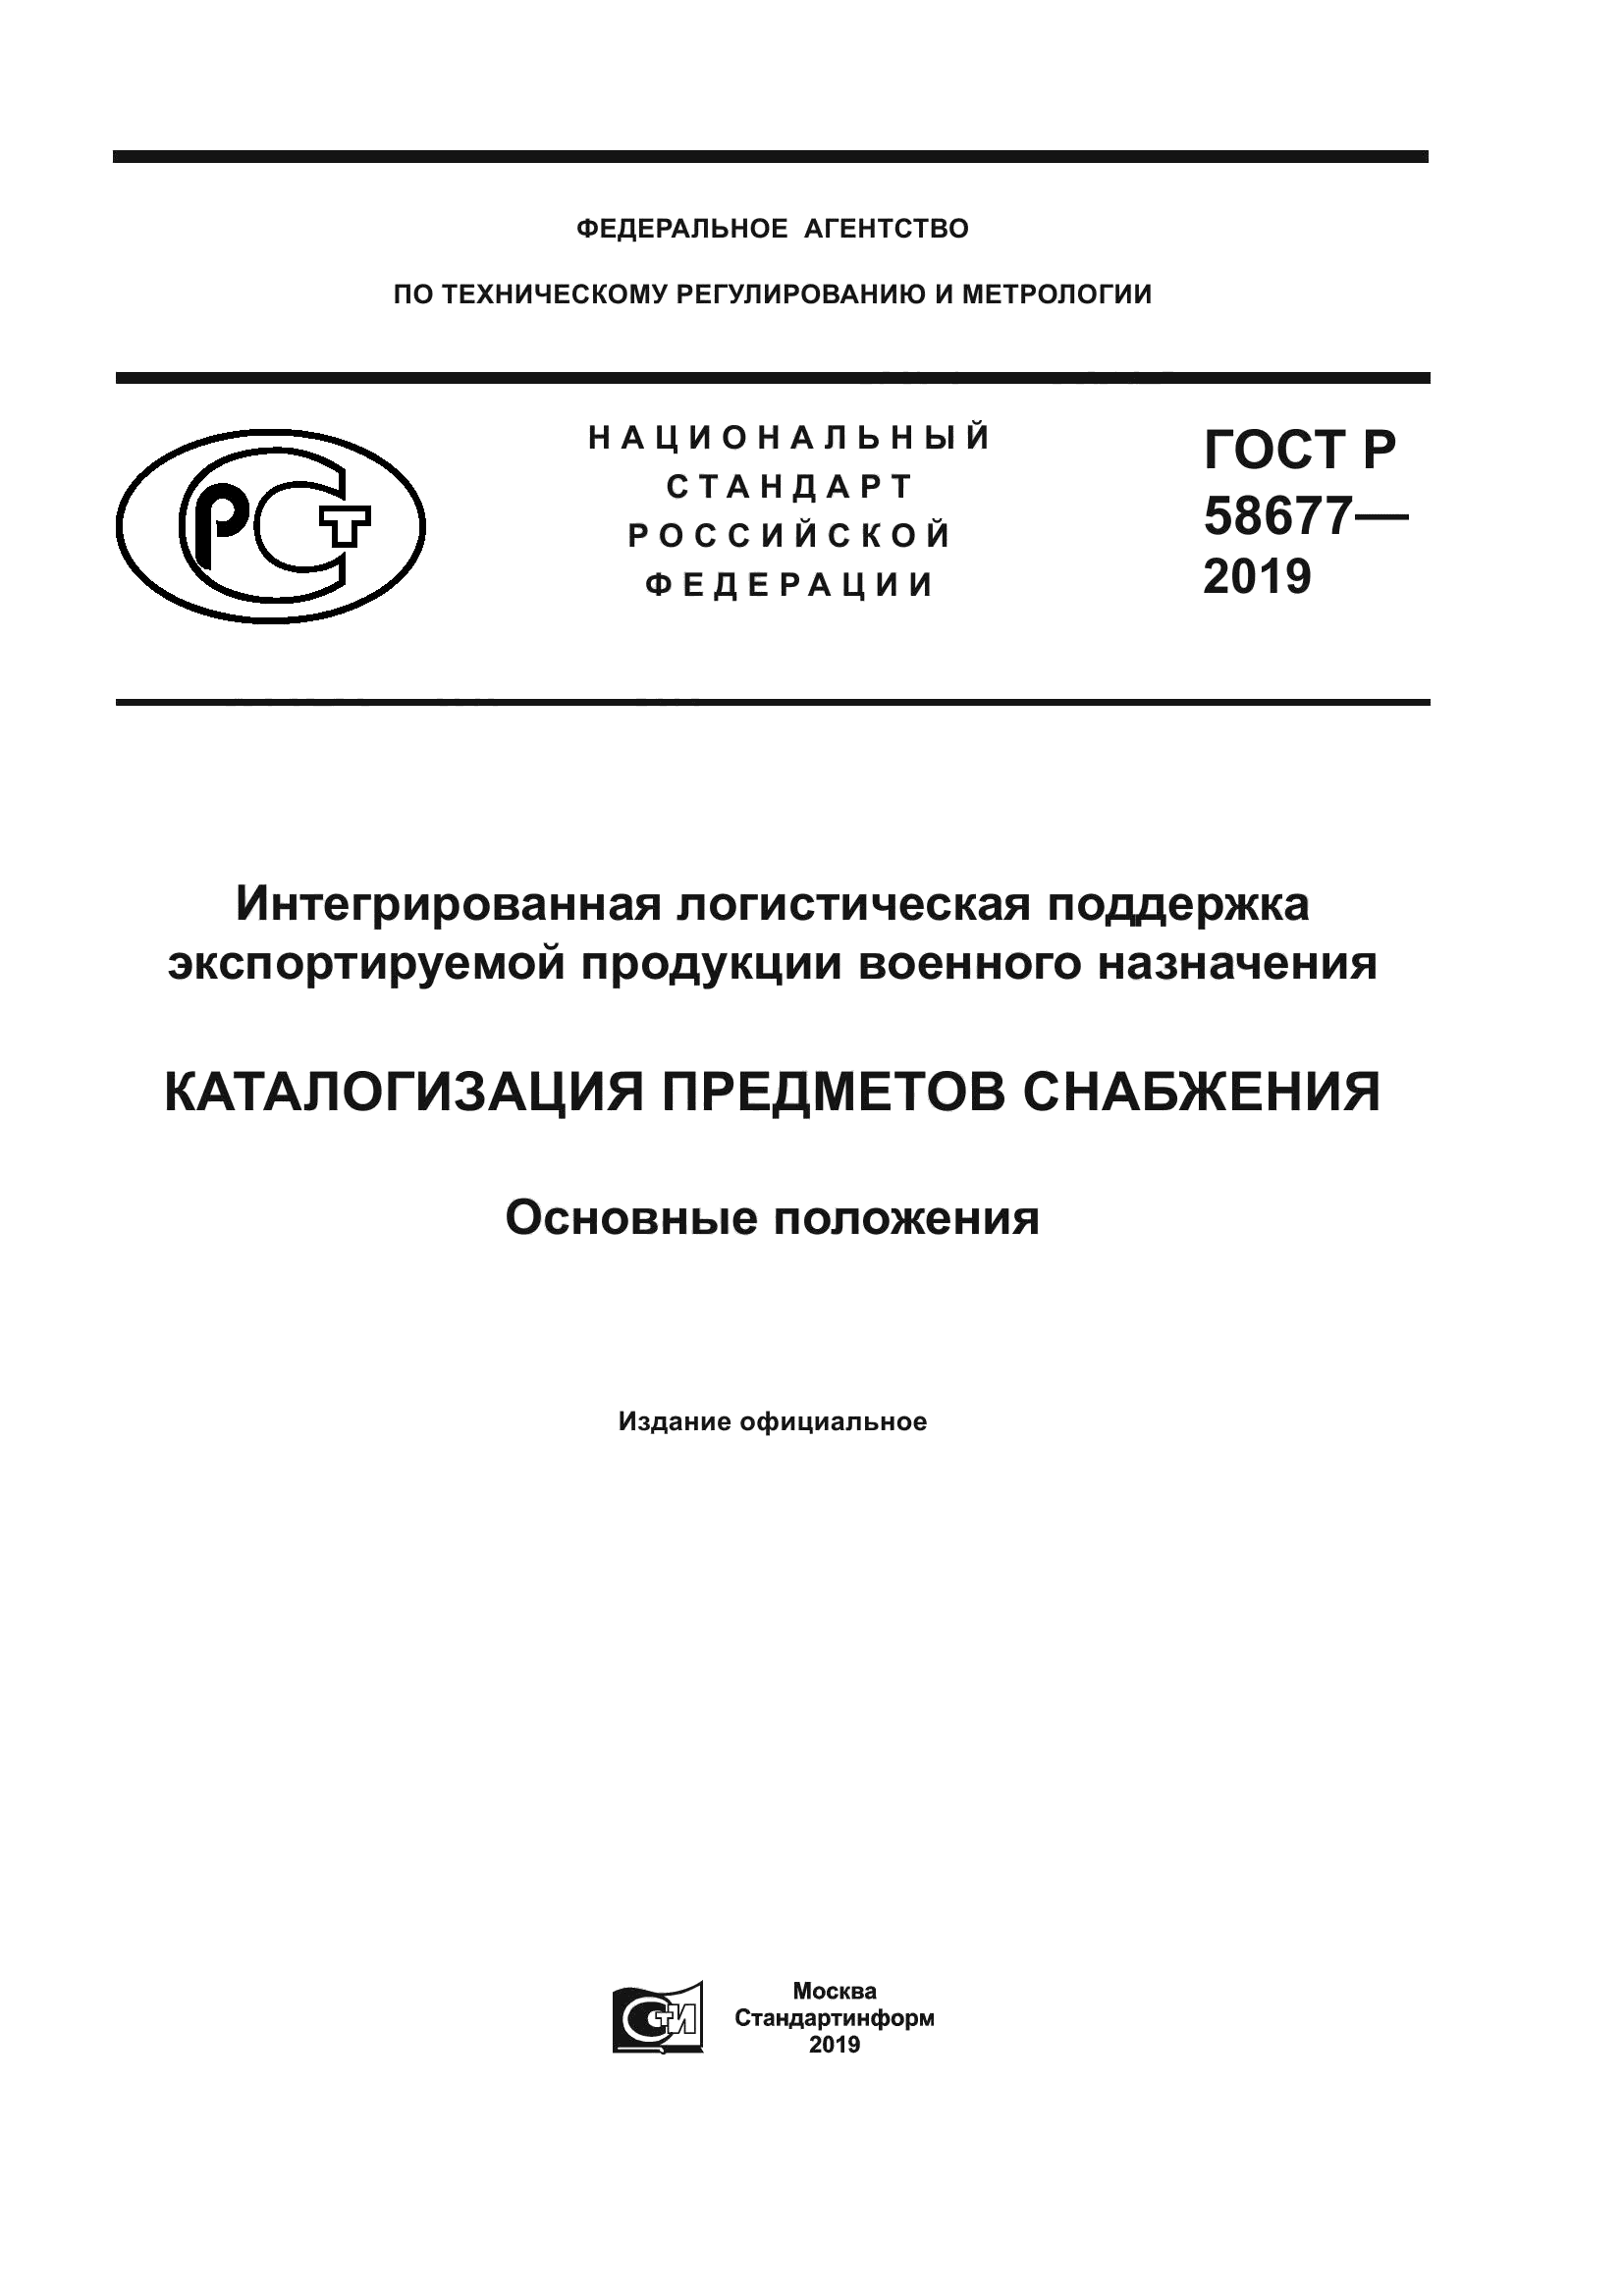 ГОСТ Р 58677-2019